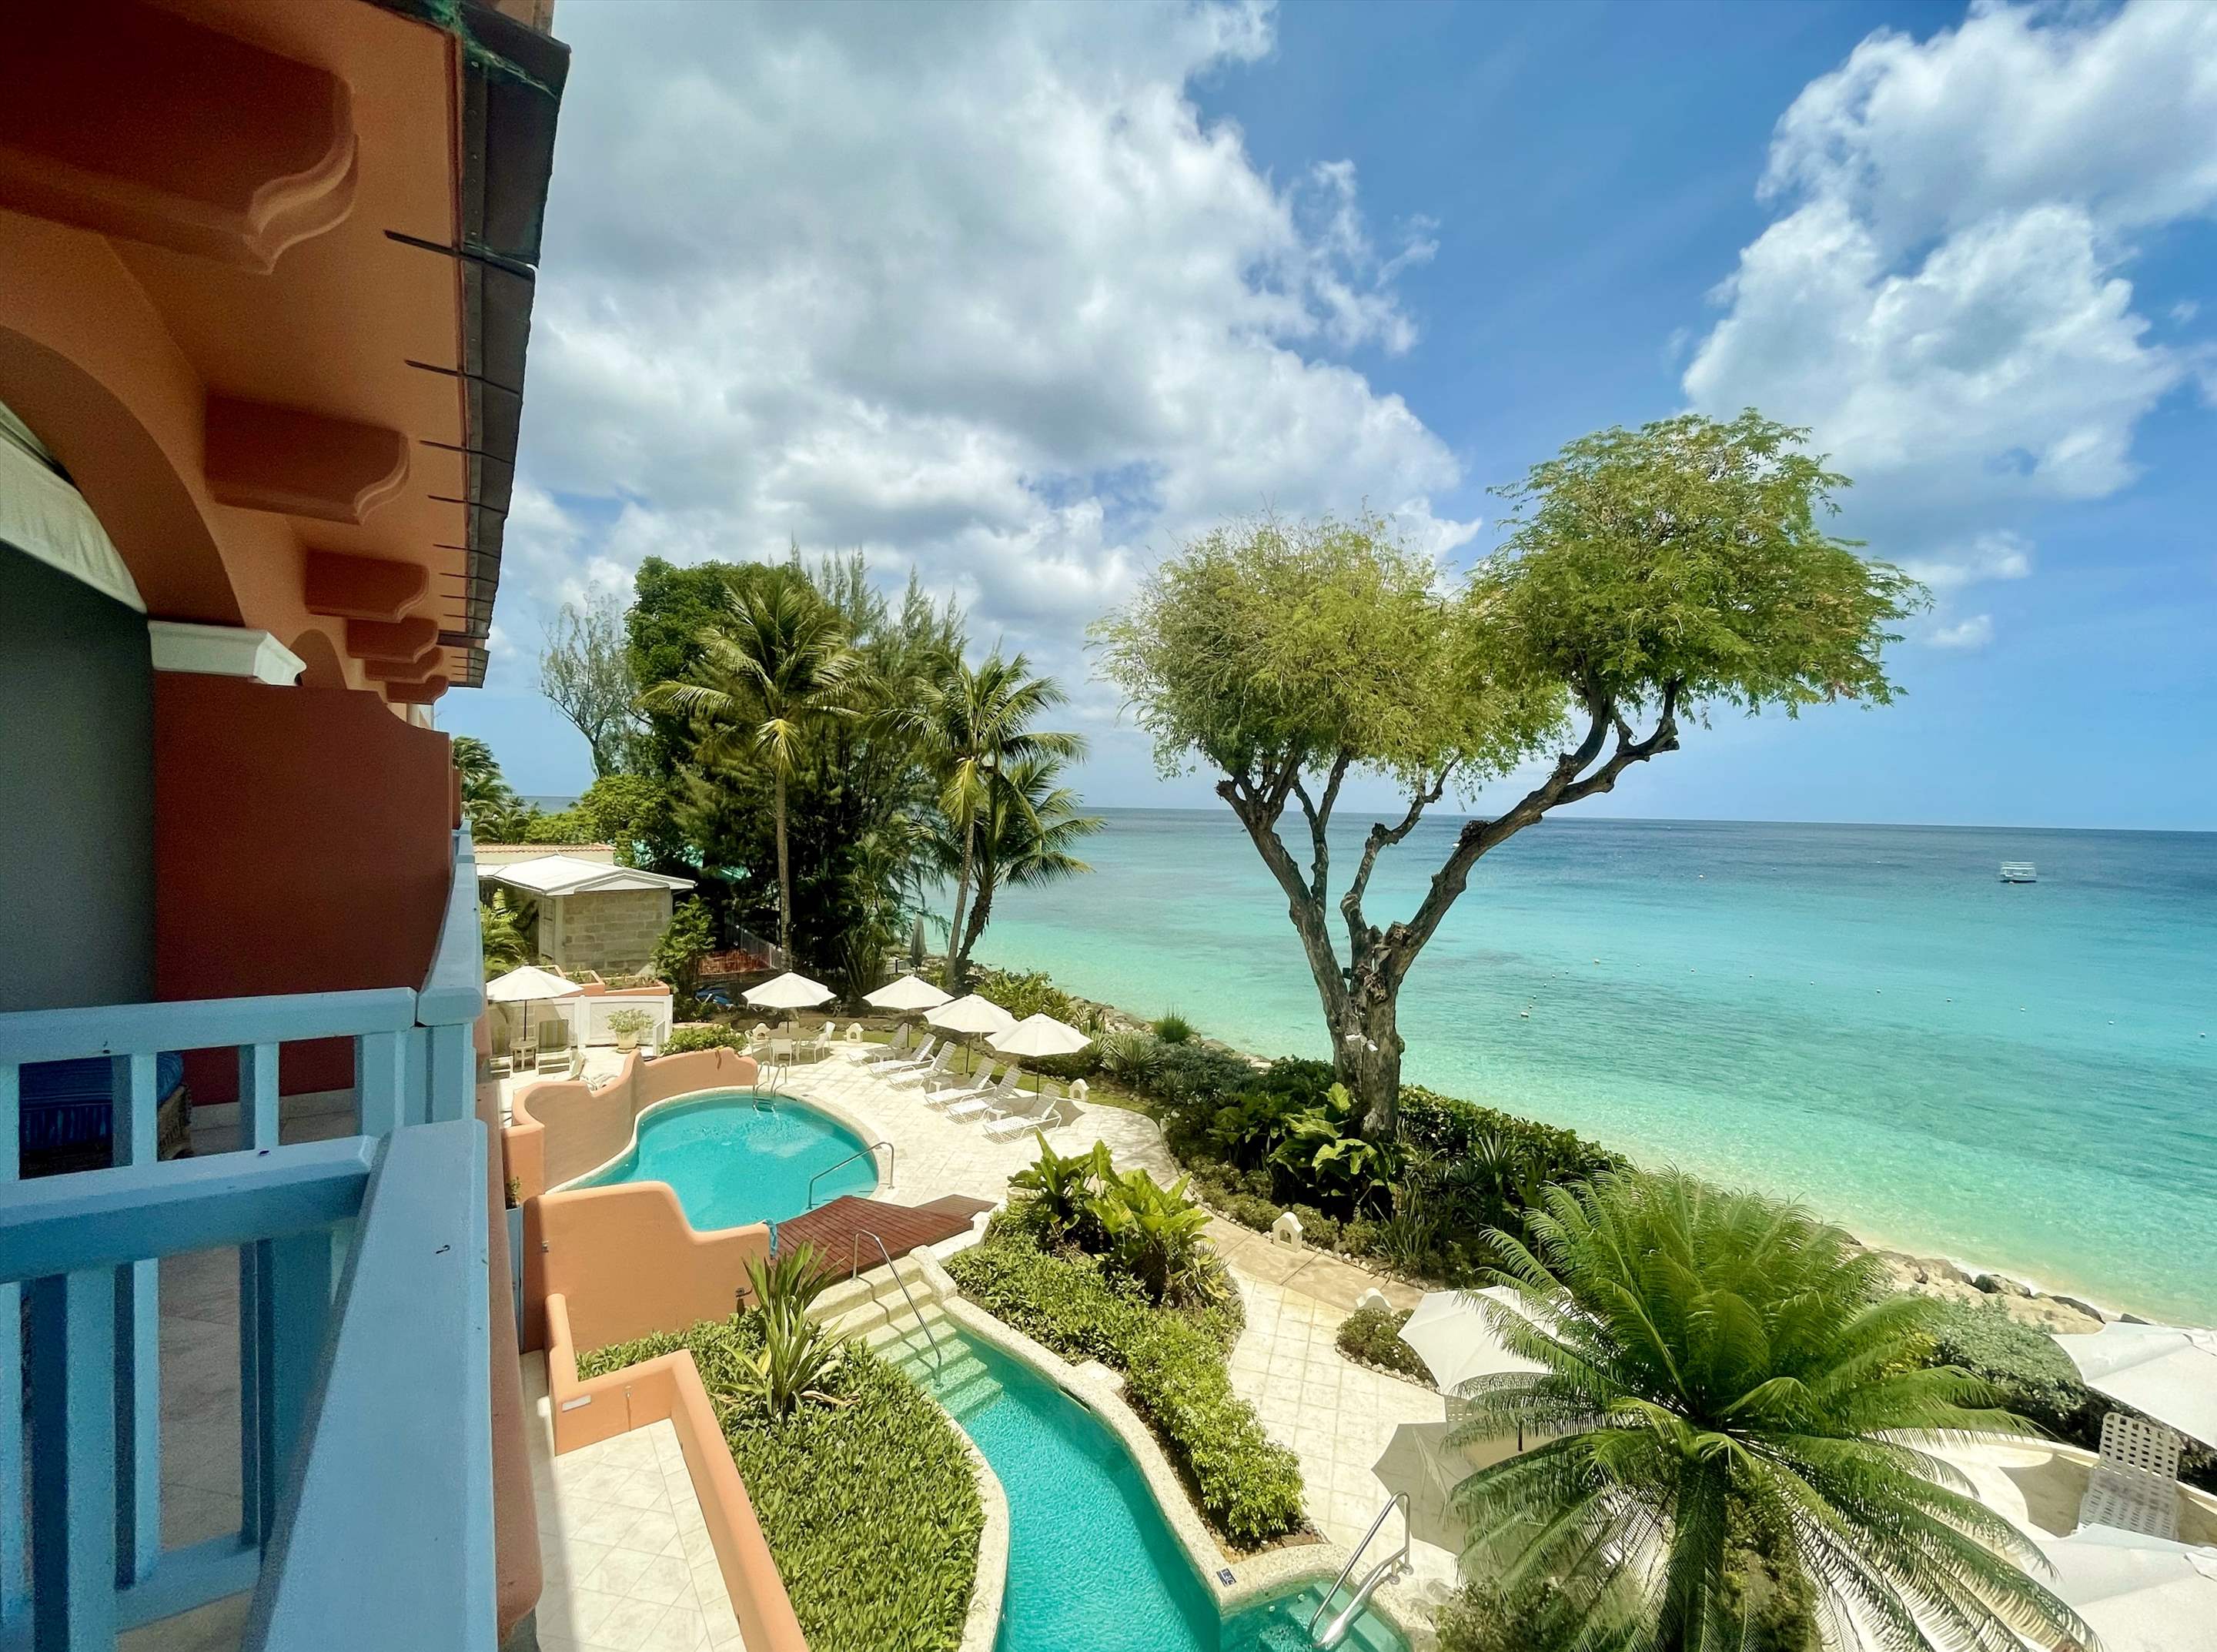 Villas on the Beach 303, 1 bedroom, 1 bedroom apartment in St. James & West Coast, Barbados Photo #4